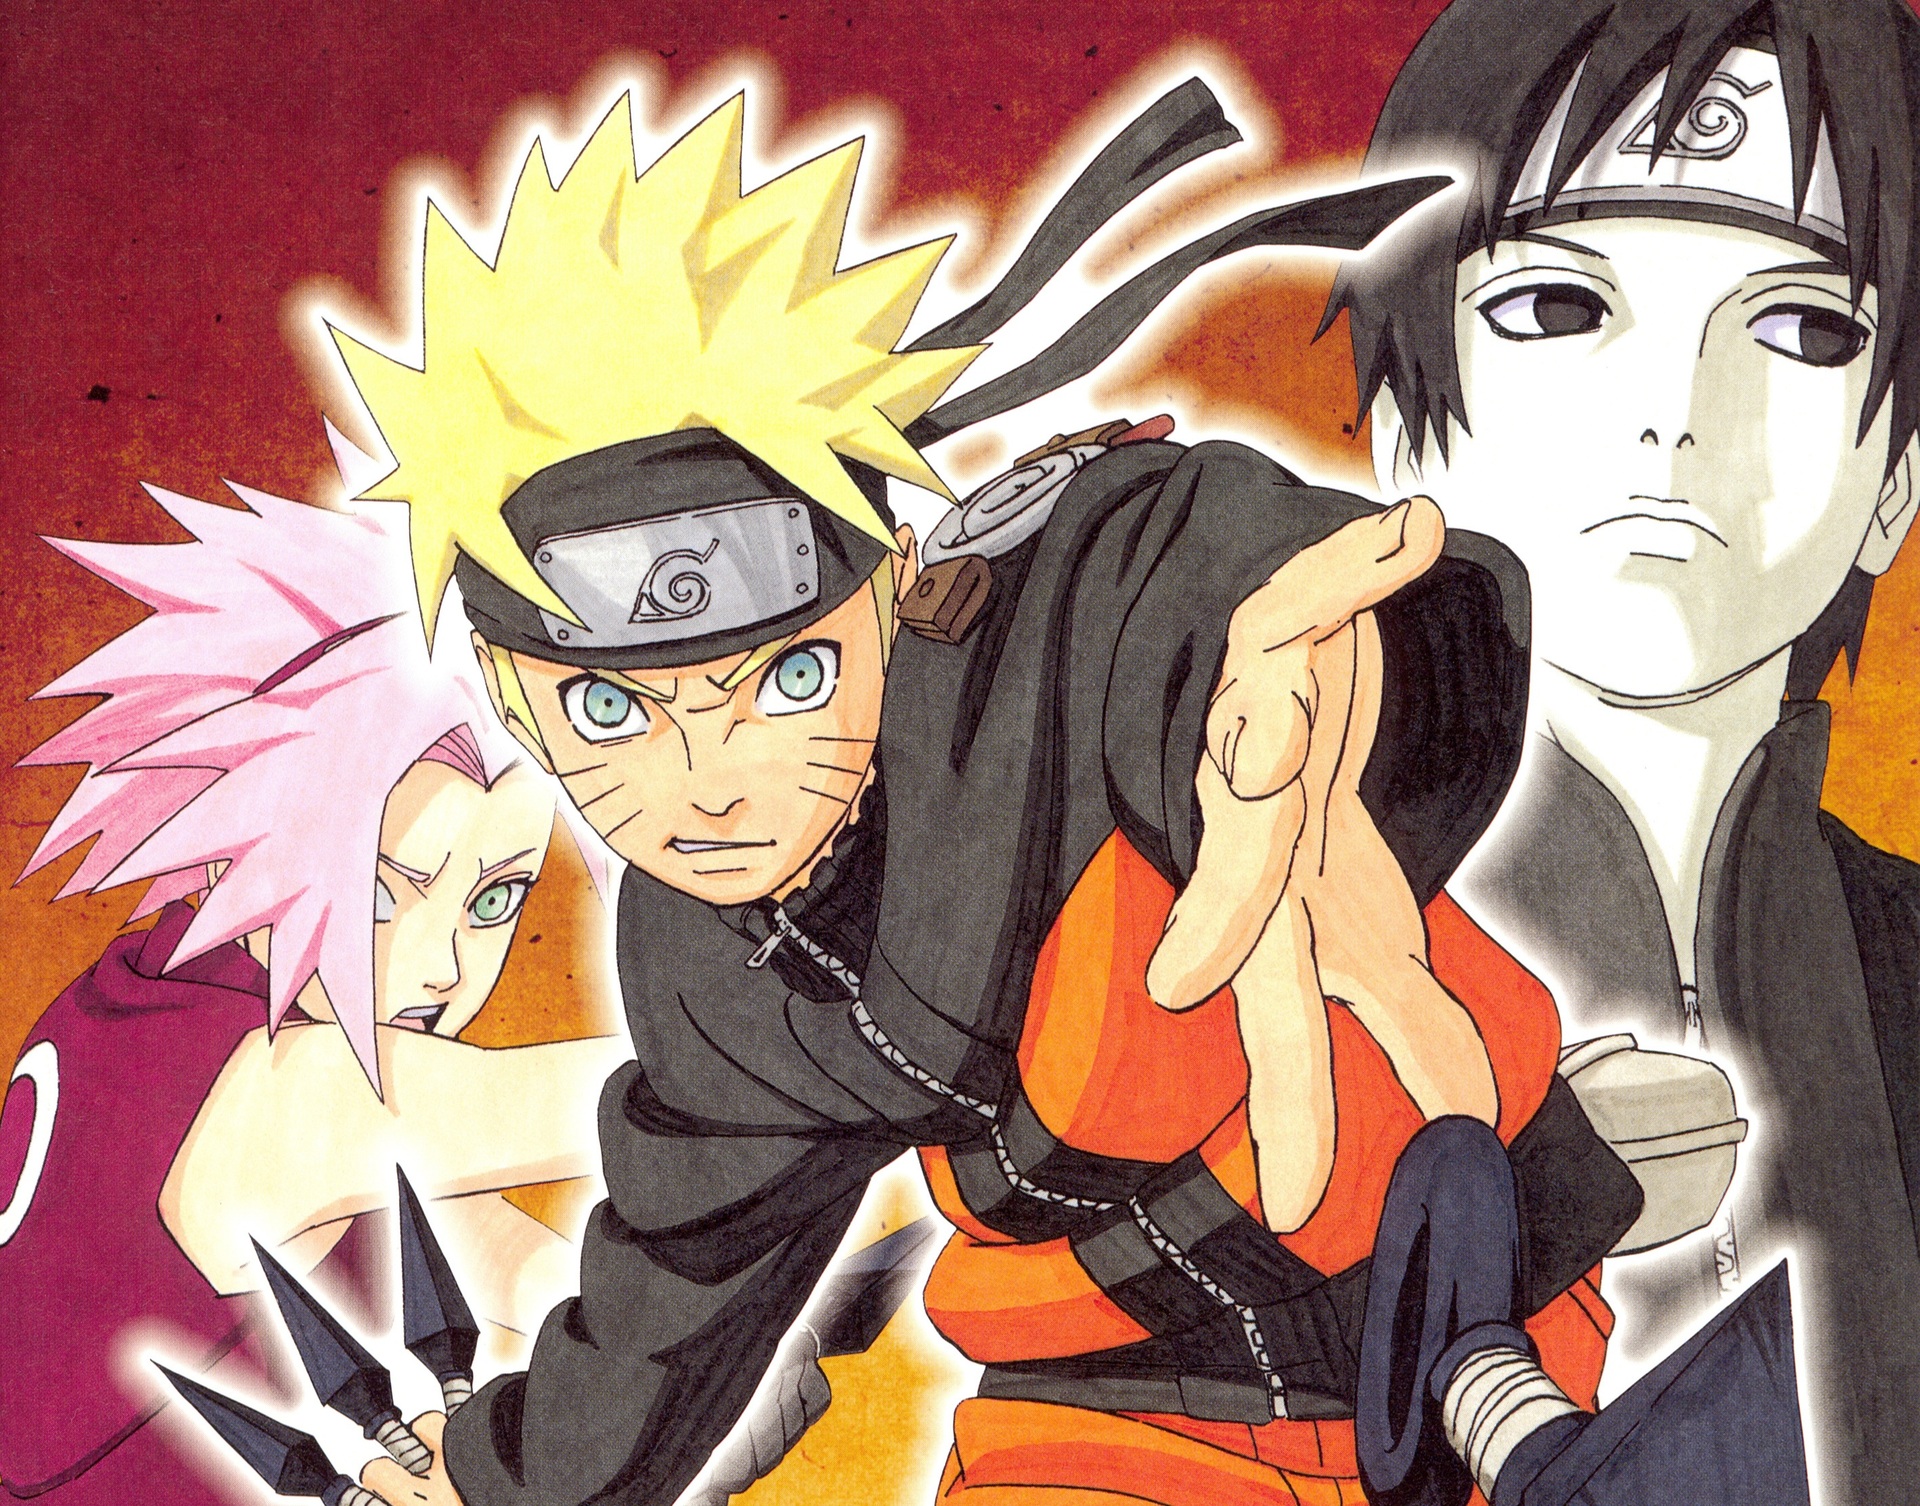 Baixe gratuitamente a imagem Anime, Naruto, Sakura Haruno, Naruto Uzumaki, Sai (Naruto) na área de trabalho do seu PC